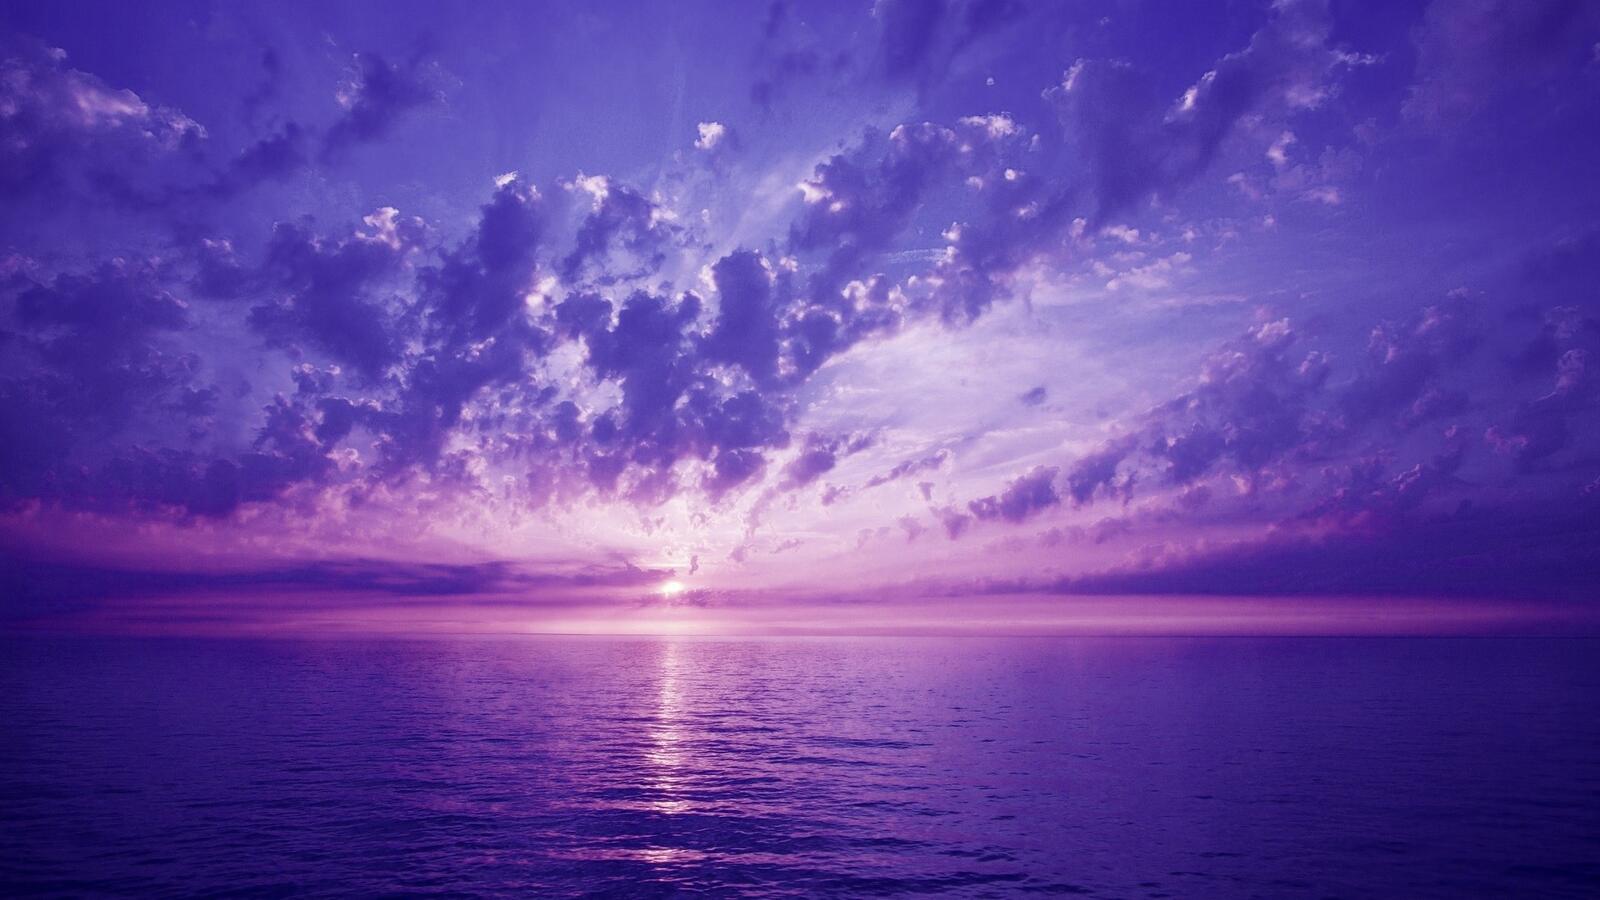 Бесплатное фото Фиолетовый закат на небе с облаками на море